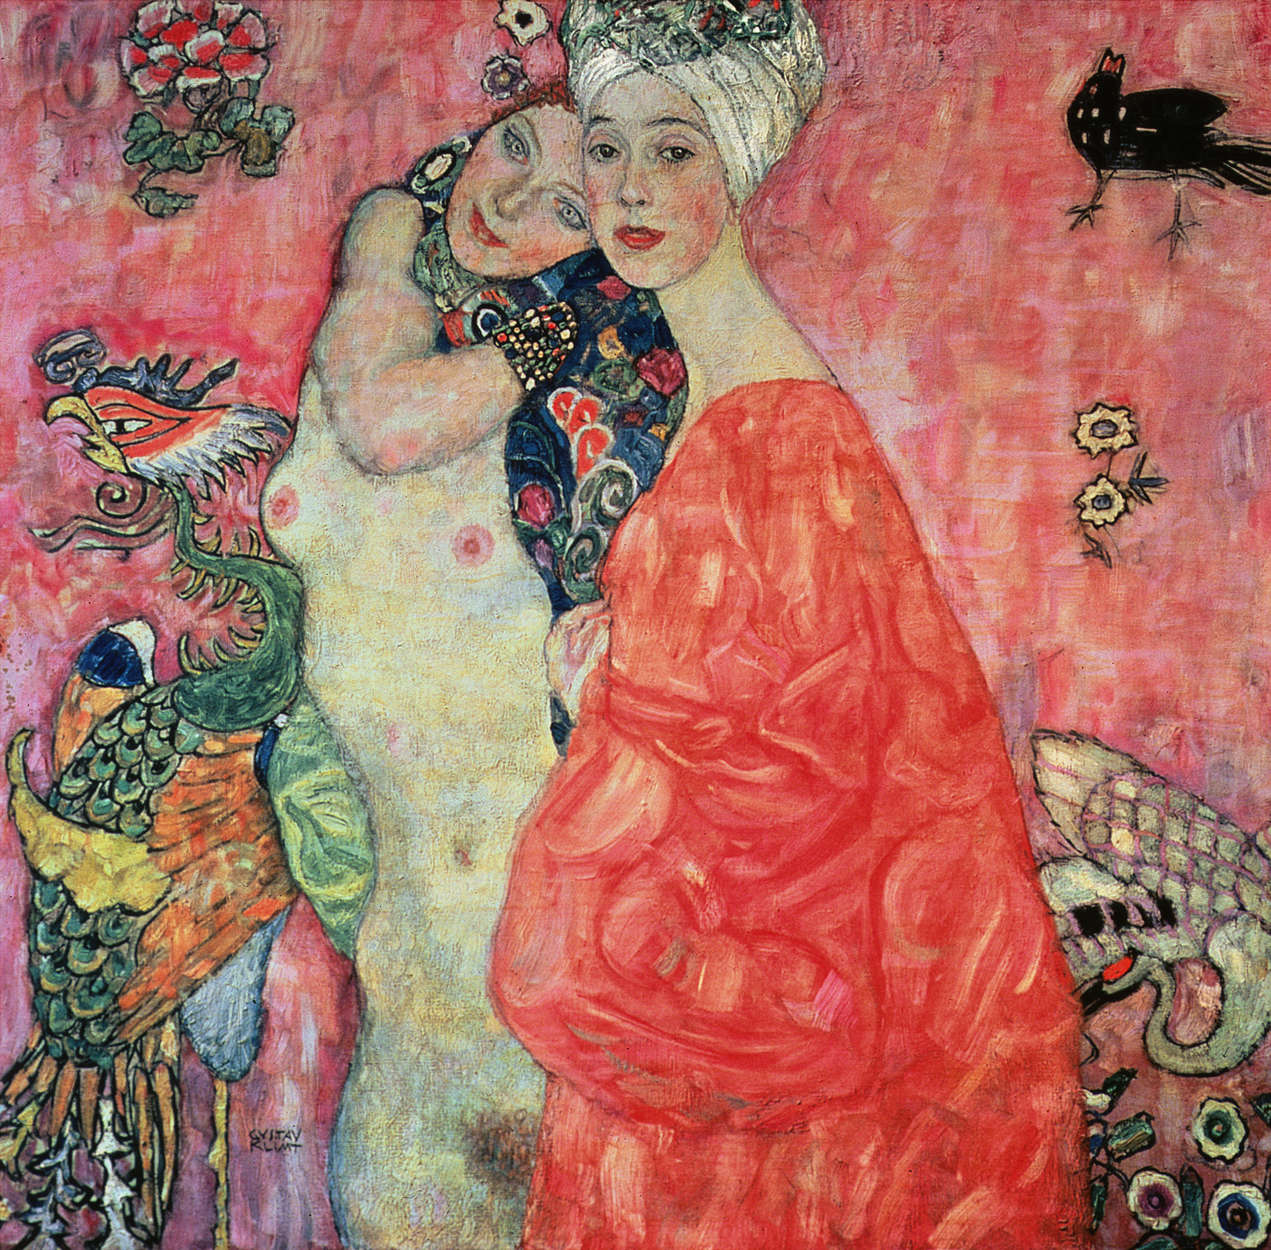             Photo wallpaper "The girlfriends" by Gustav Klimt
        